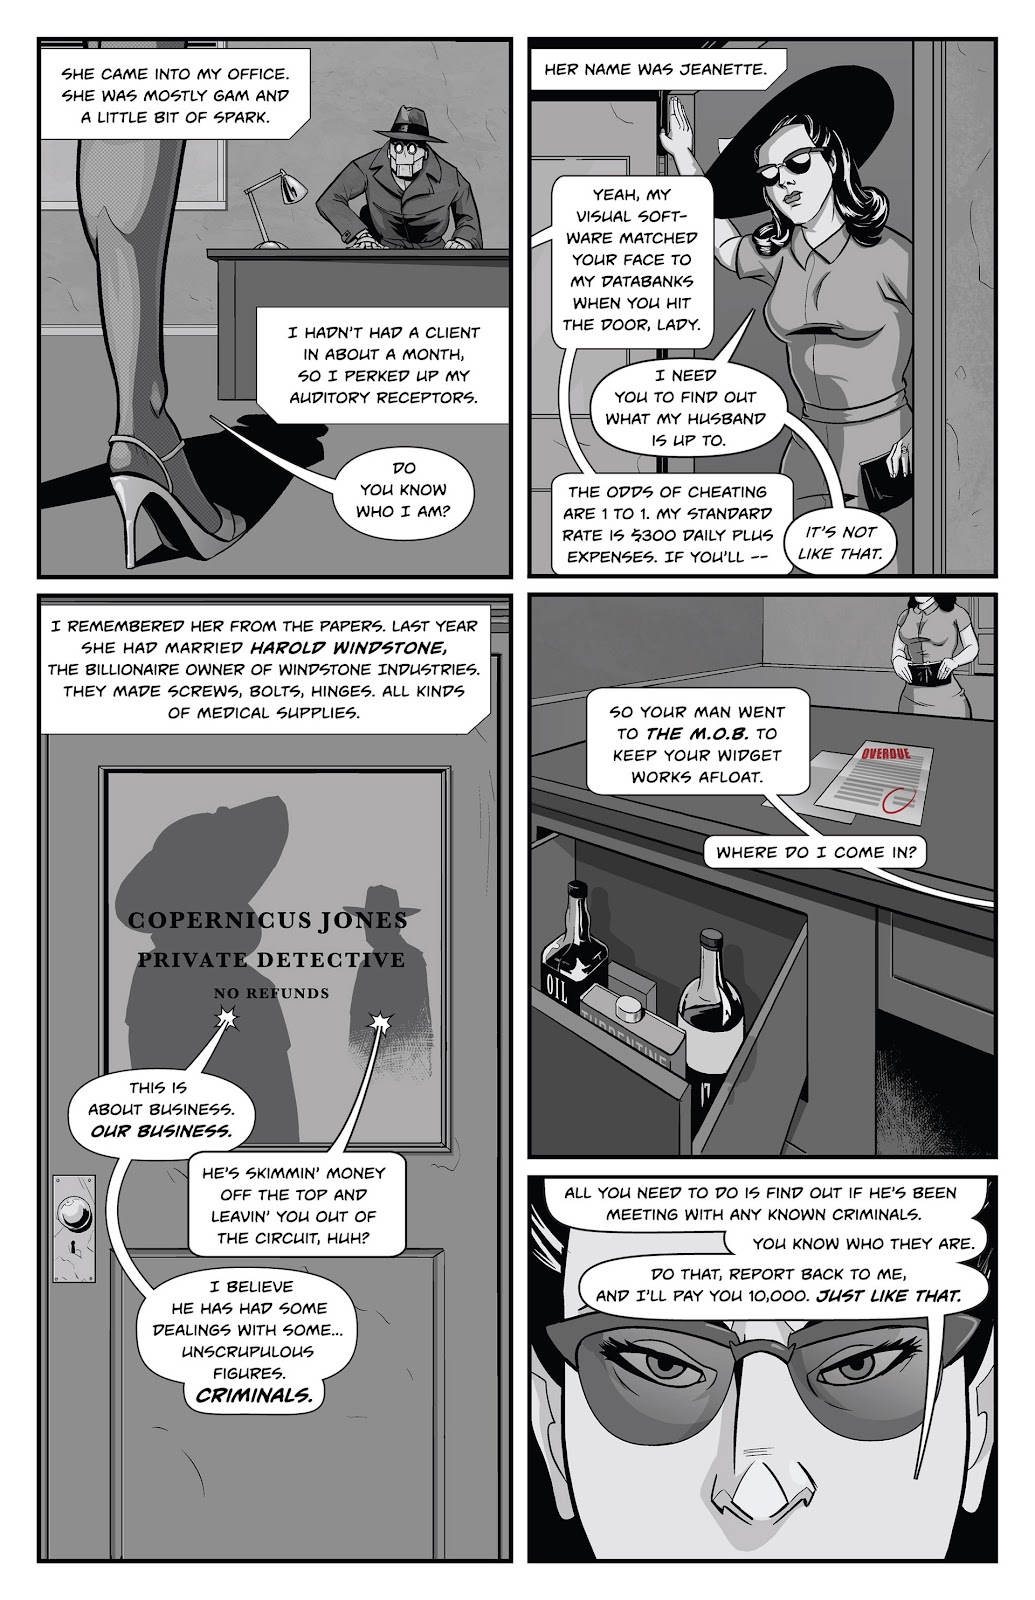 Copernicus Jones: Robot Detective issue 1 - Page 4